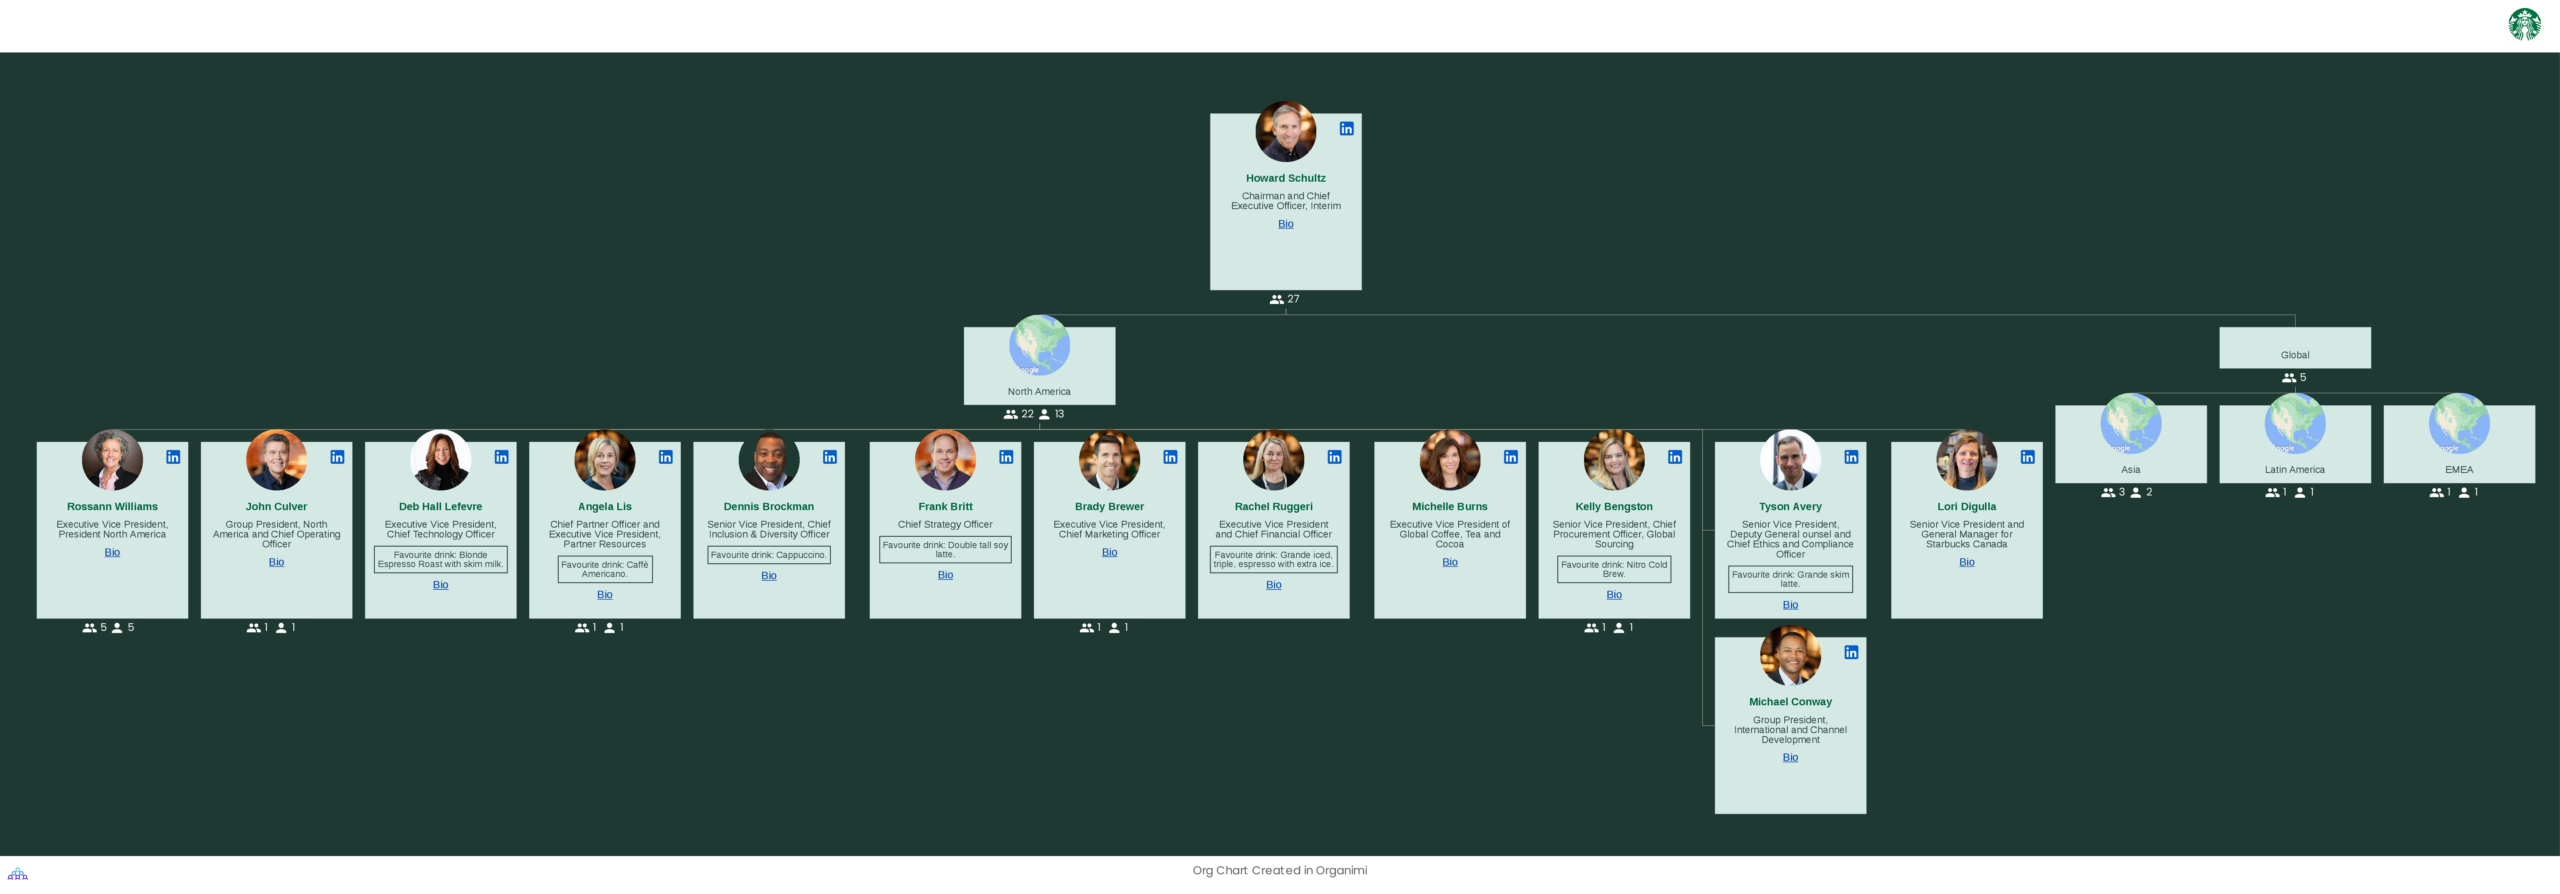 Rustic combine Set out Starbucks' Organizational Structure [Interactive Chart] | Organimi